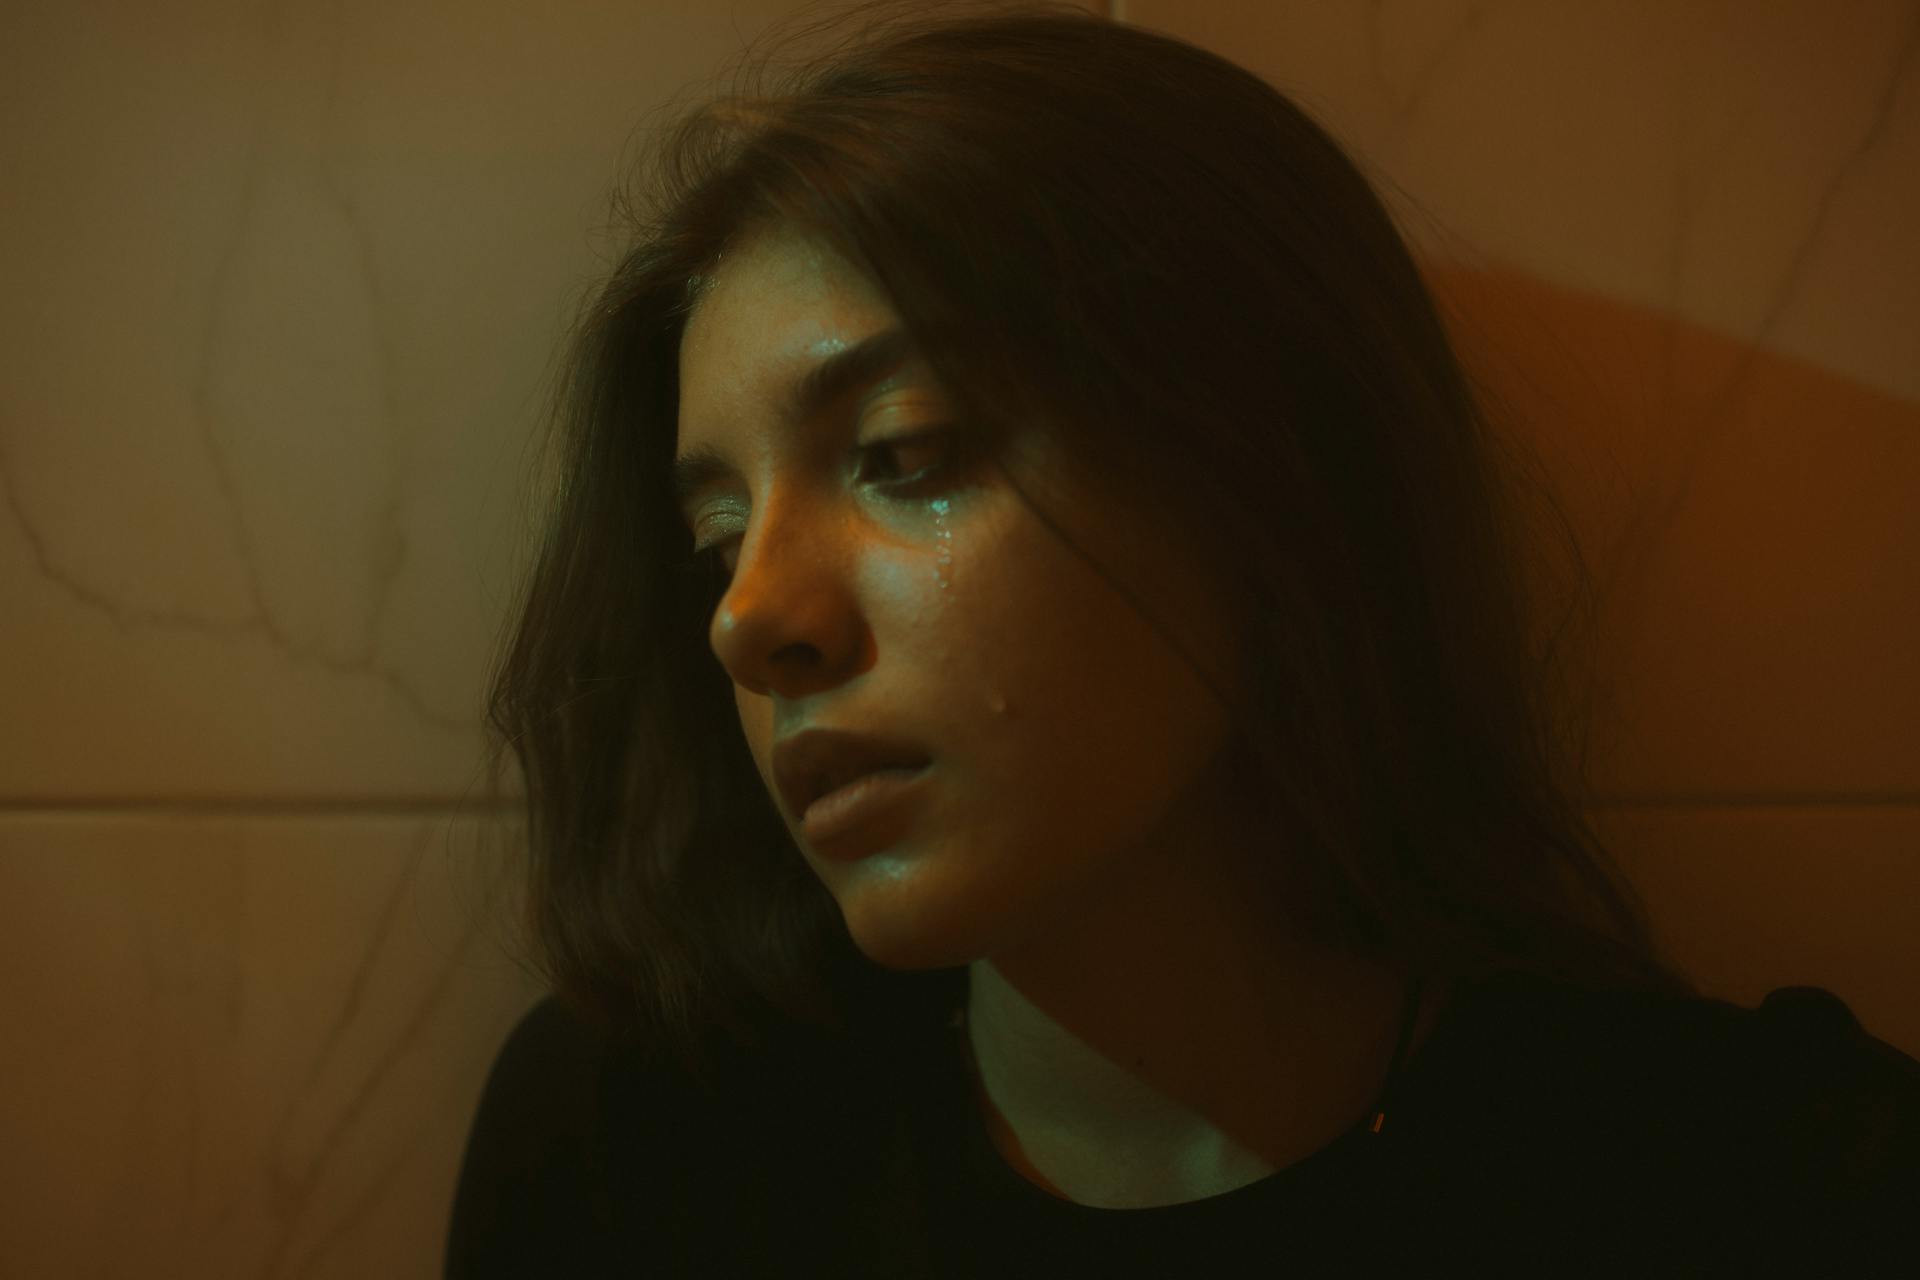 Una mujer llorosa | Fuente: Pexels